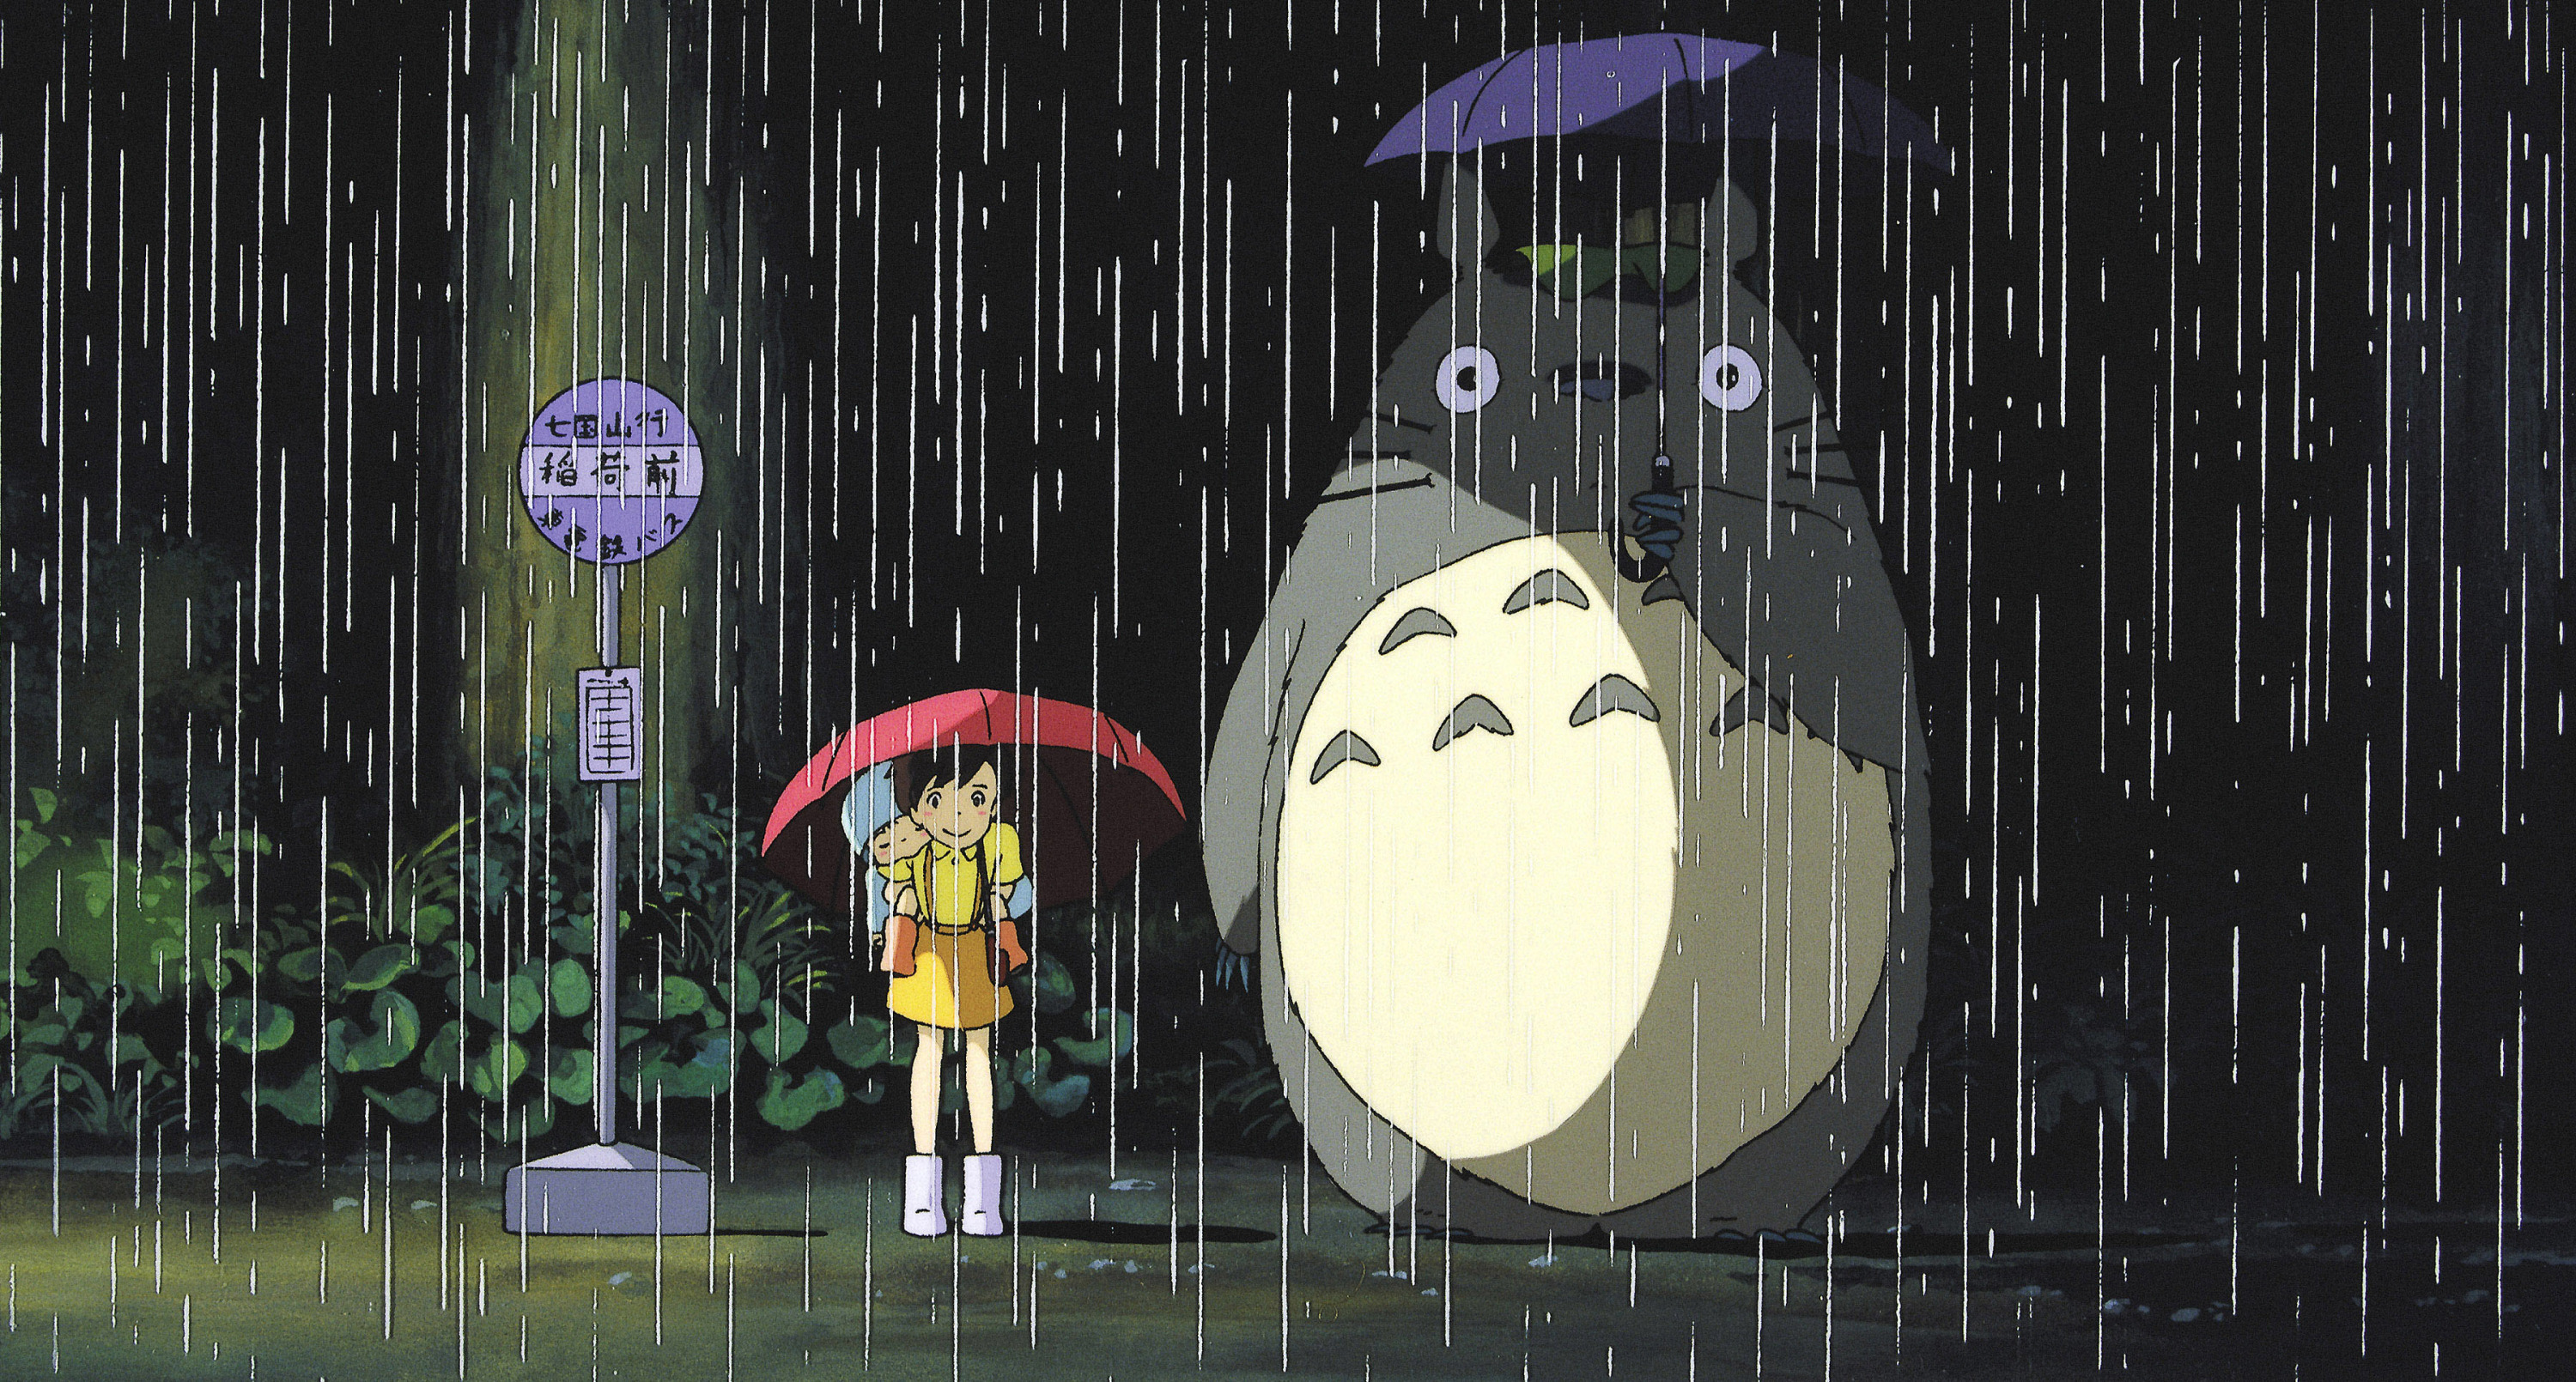 Le voyage de Chihiro : les influences d'Hayao Miyazaki